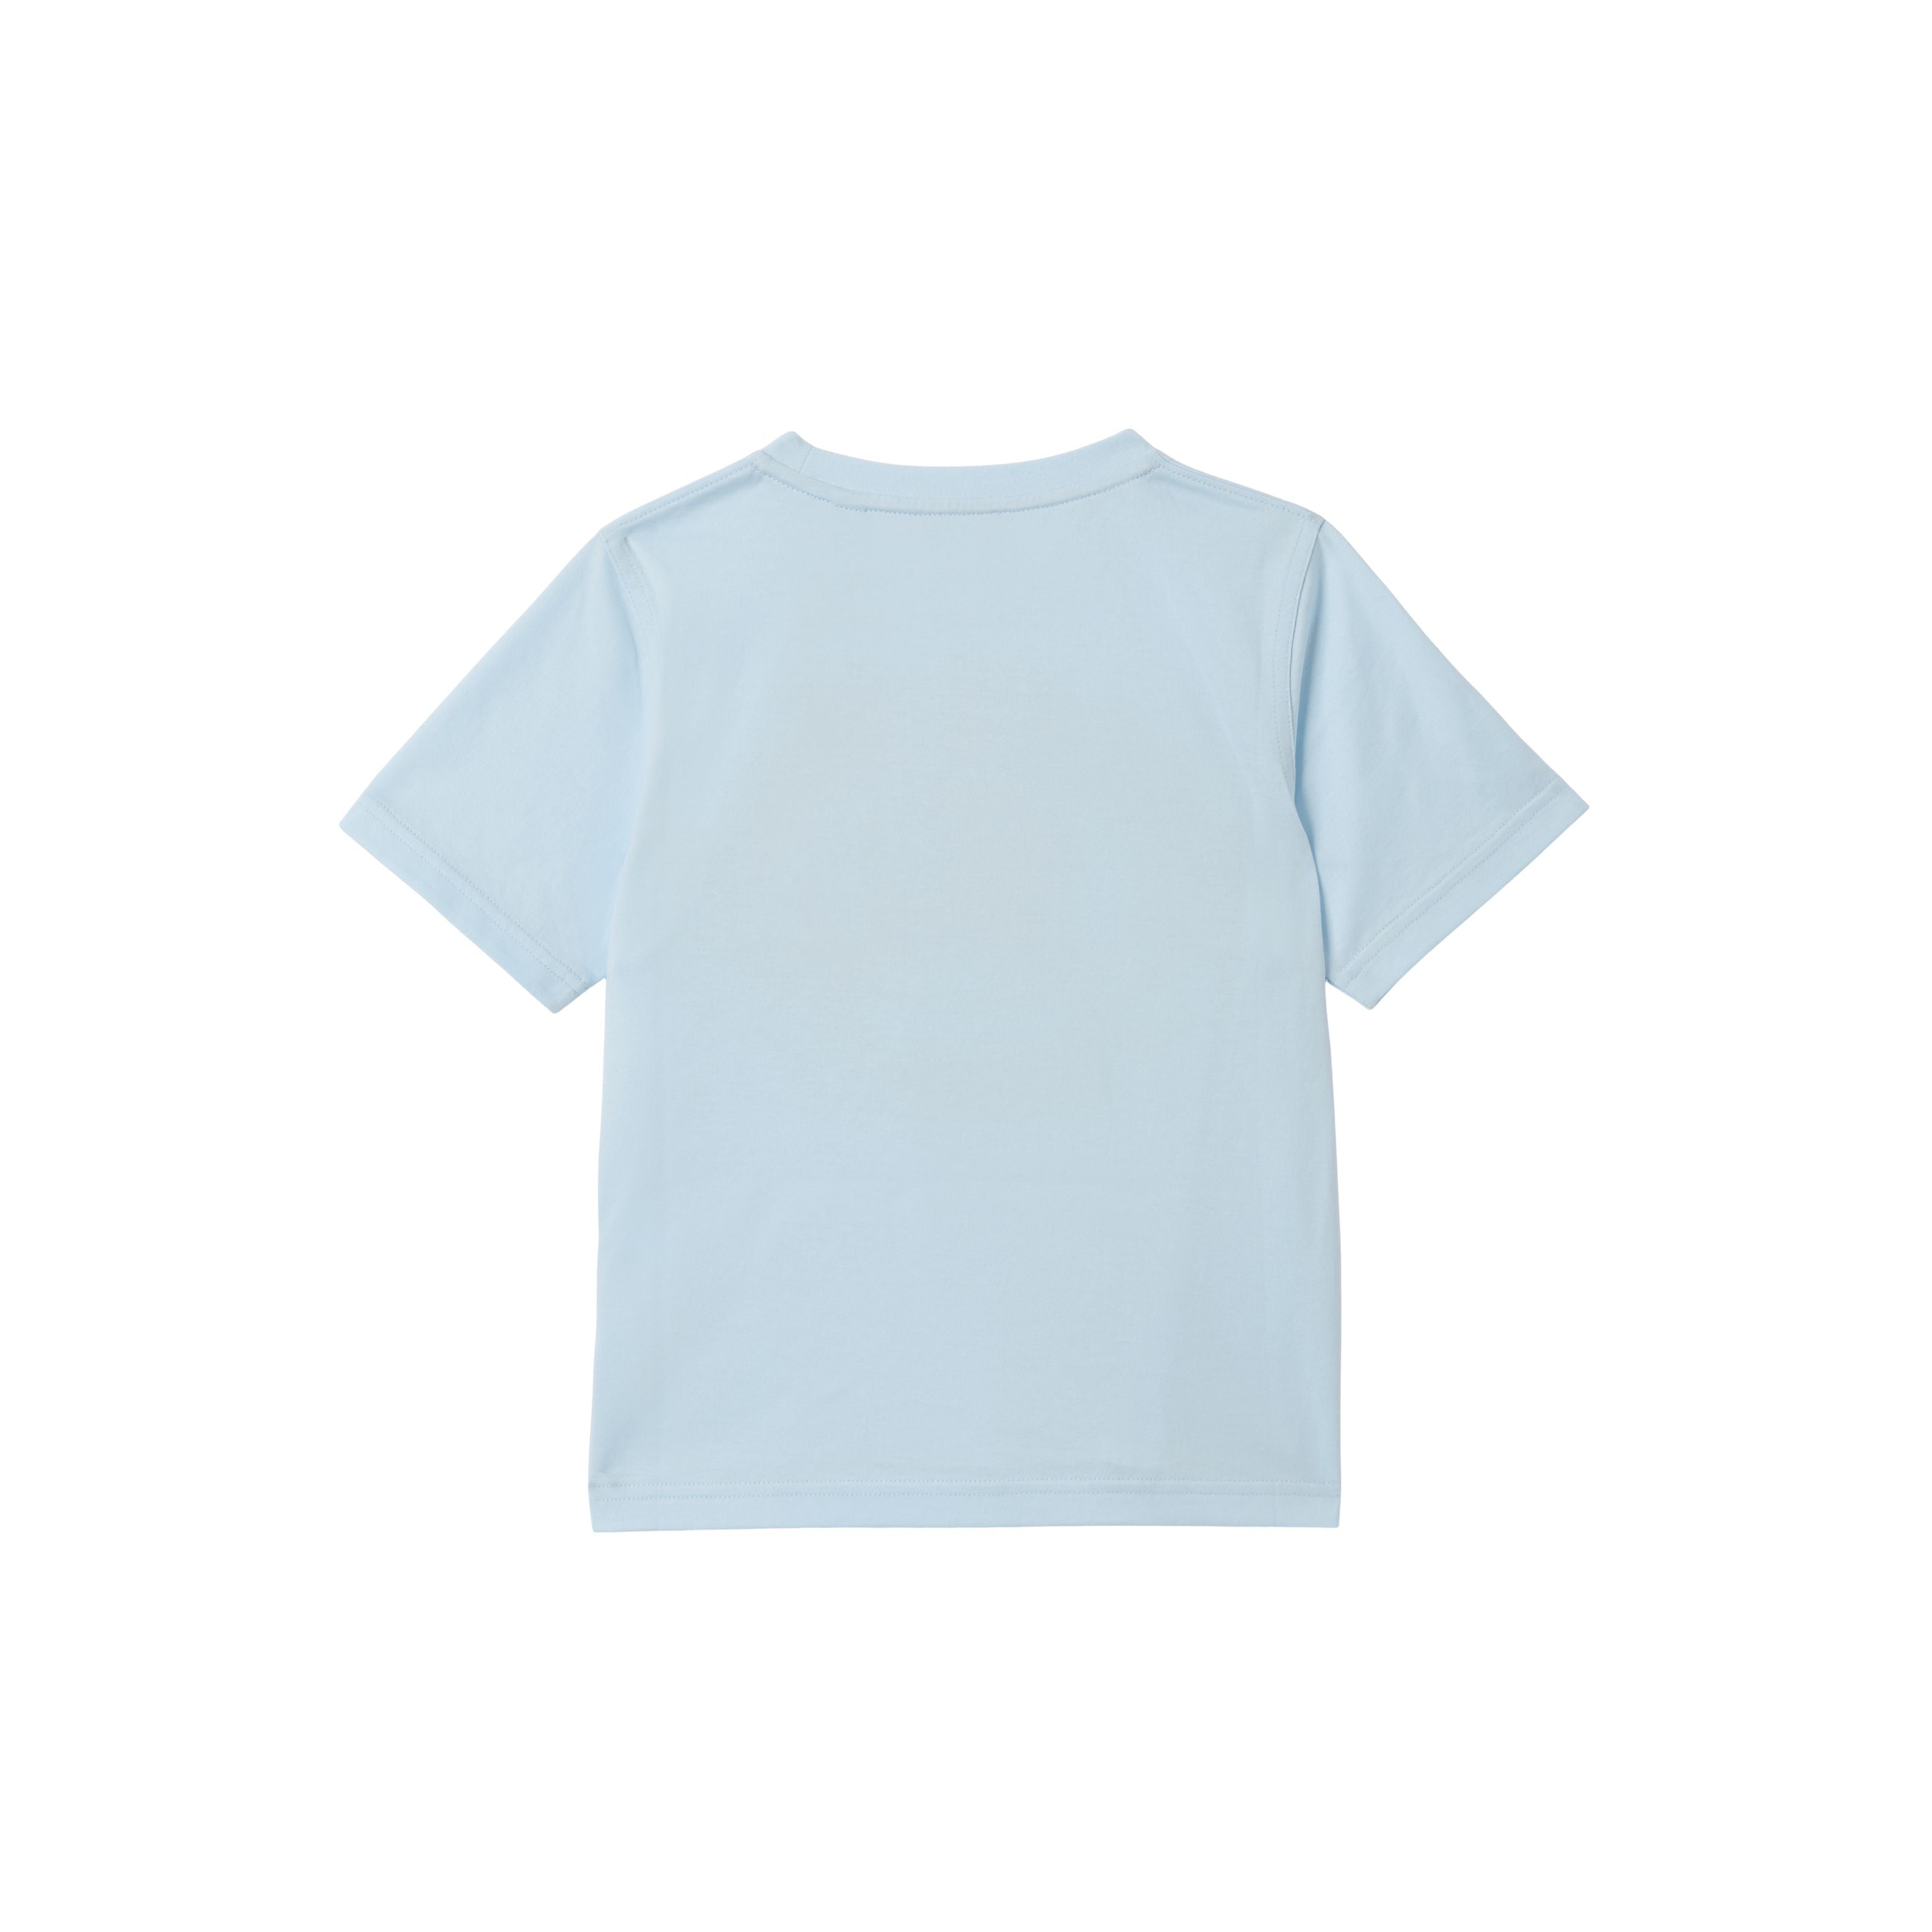 Boys & Girls Pale Blue Cotton T-Shirt